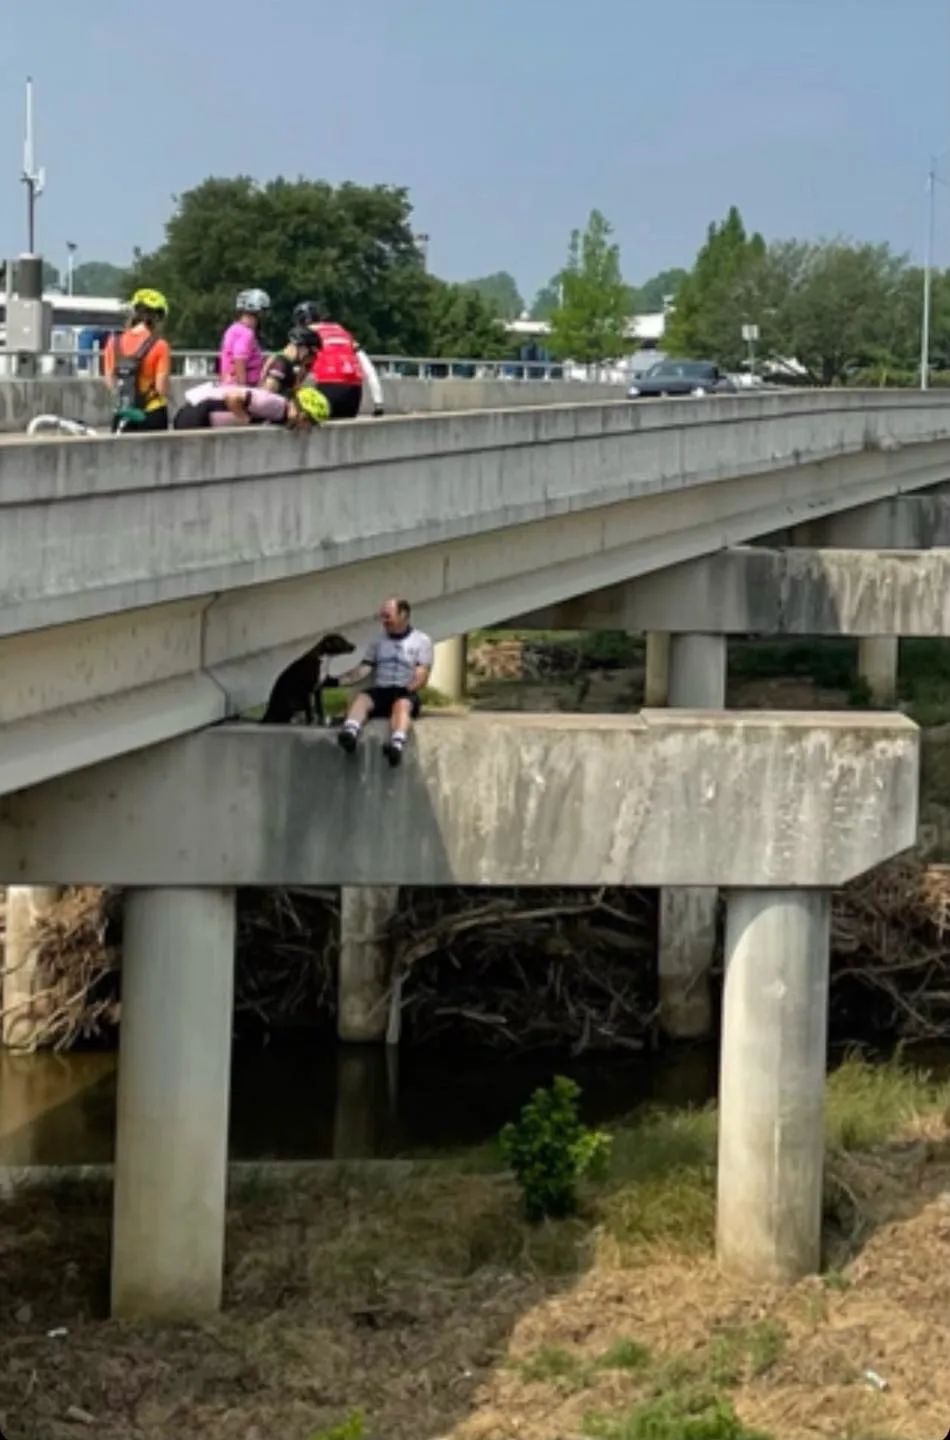 dog and cyclist sitting stranded on bridge